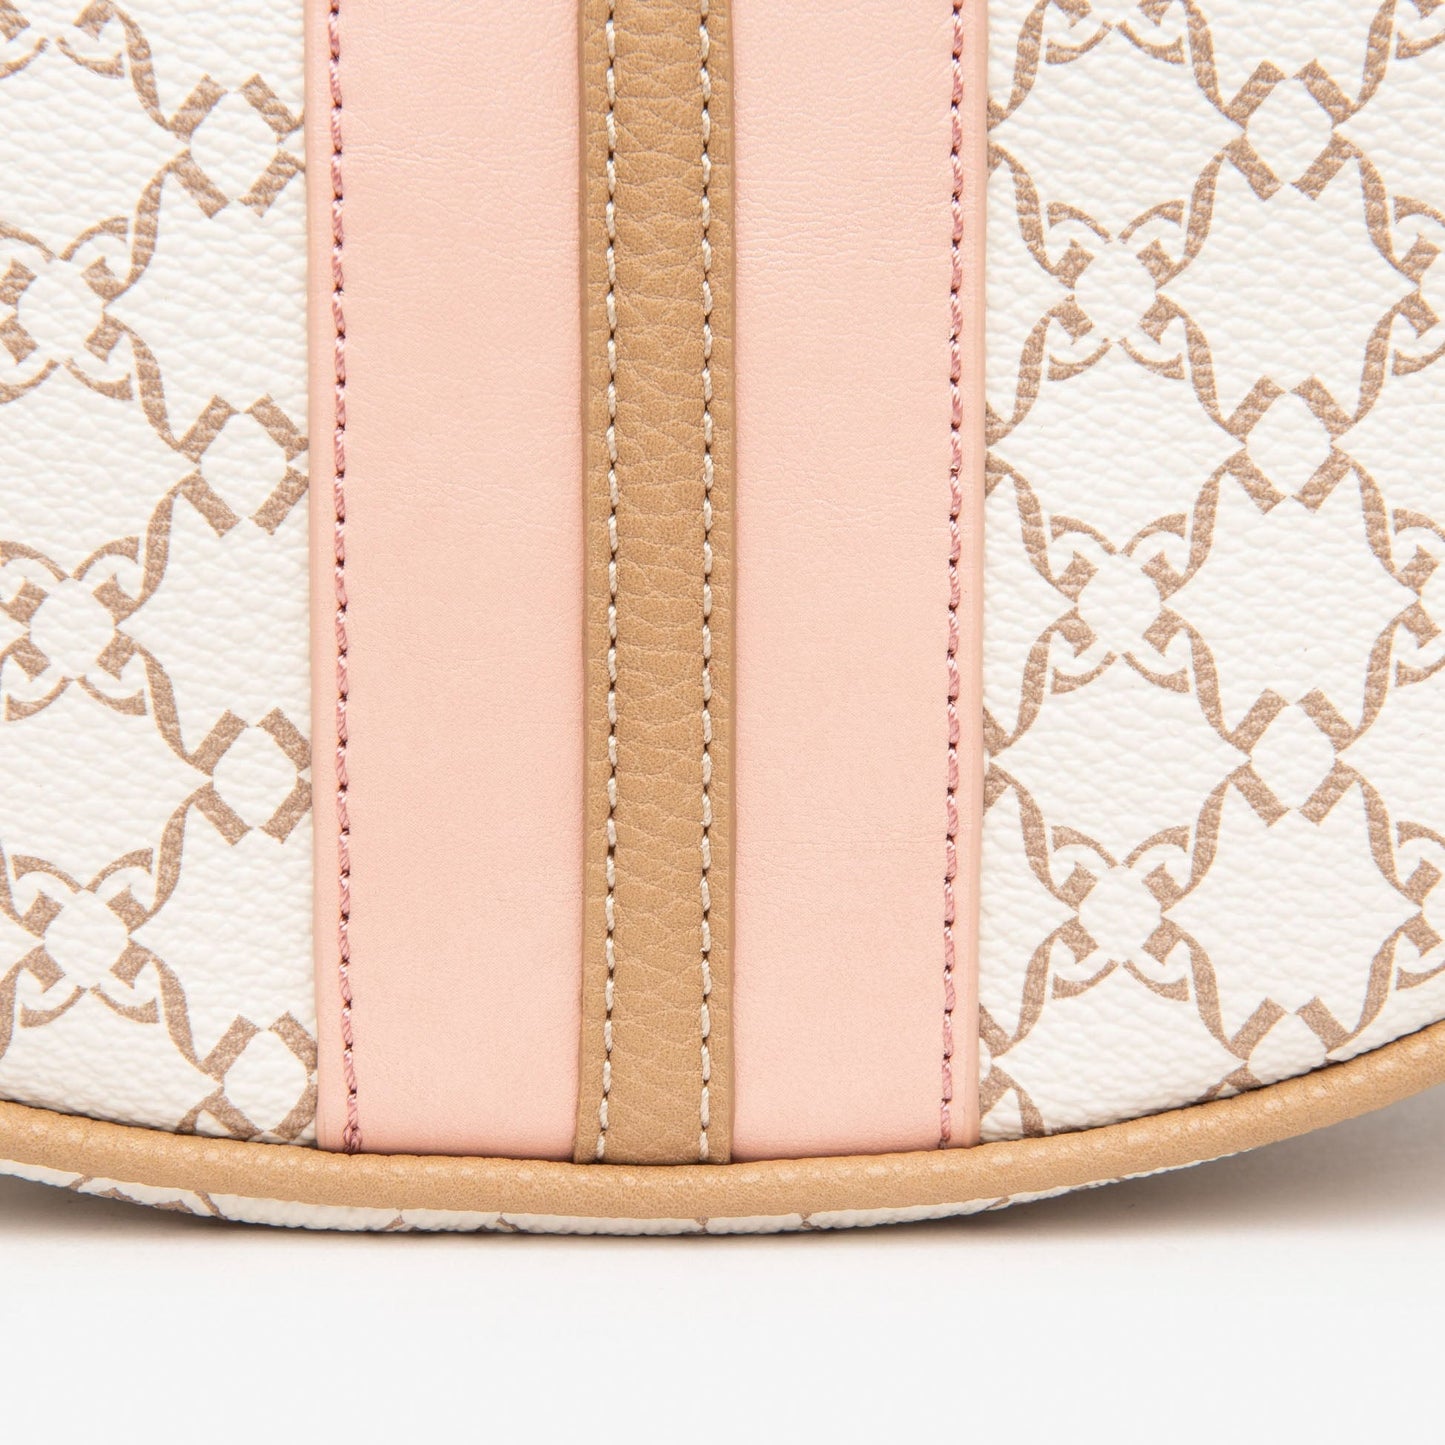 Hobo Bag NeroGiardini beige fabric with texture pink inserts